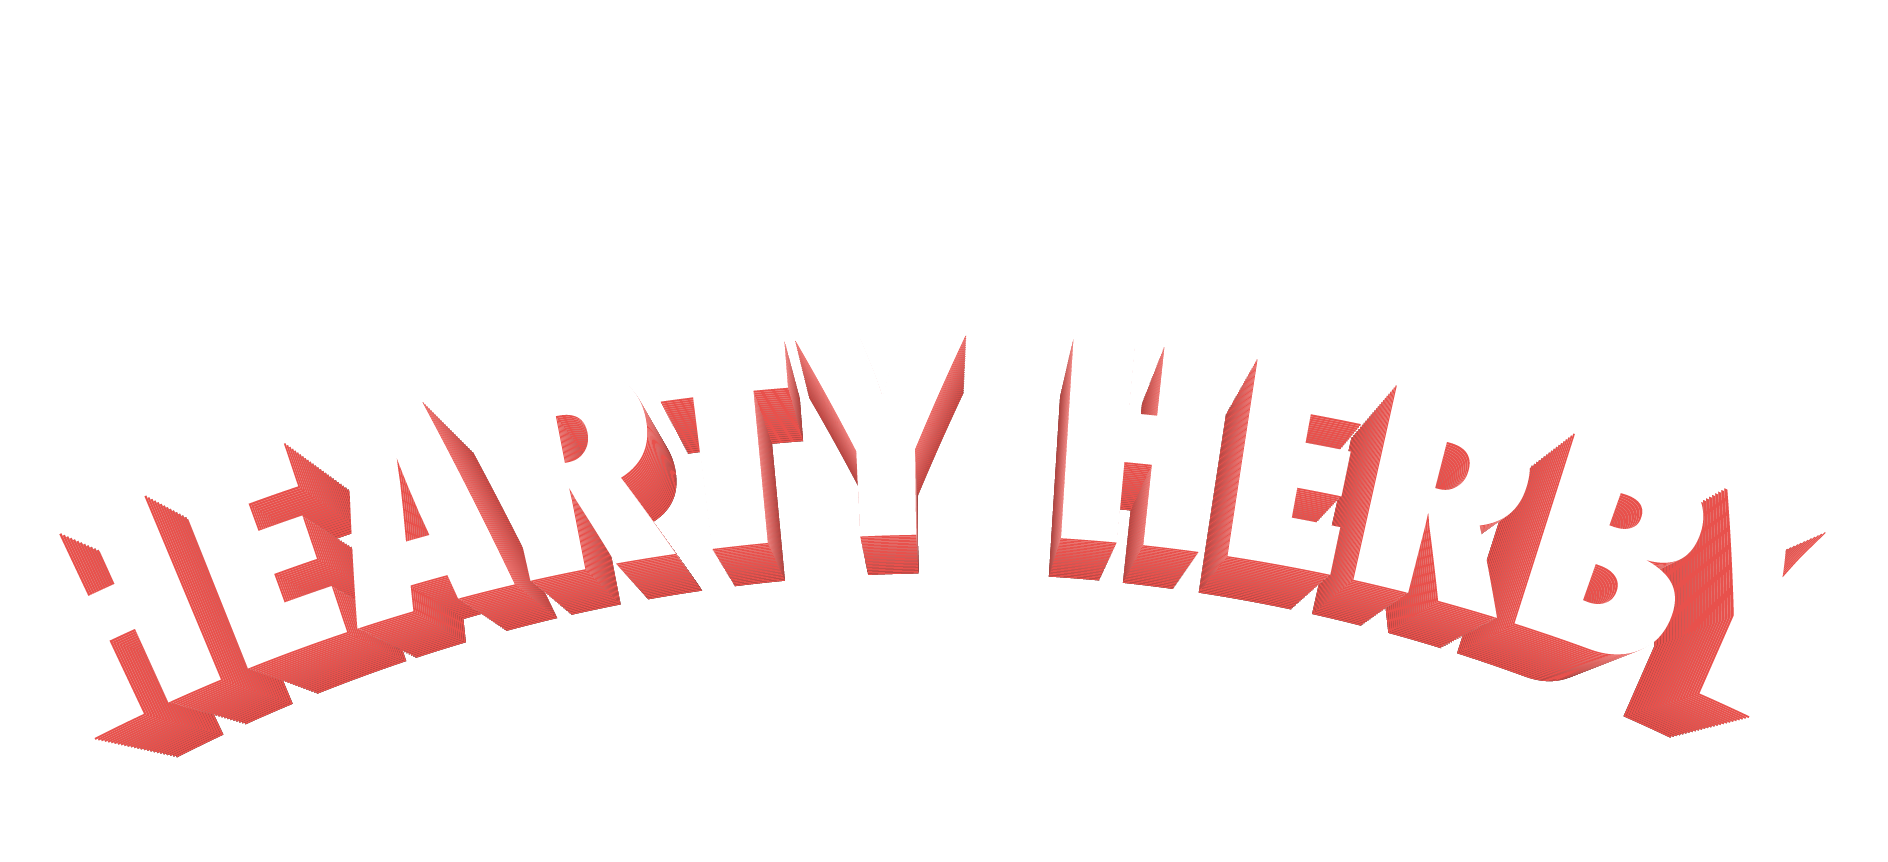 Hearty Herby Hasselbacks